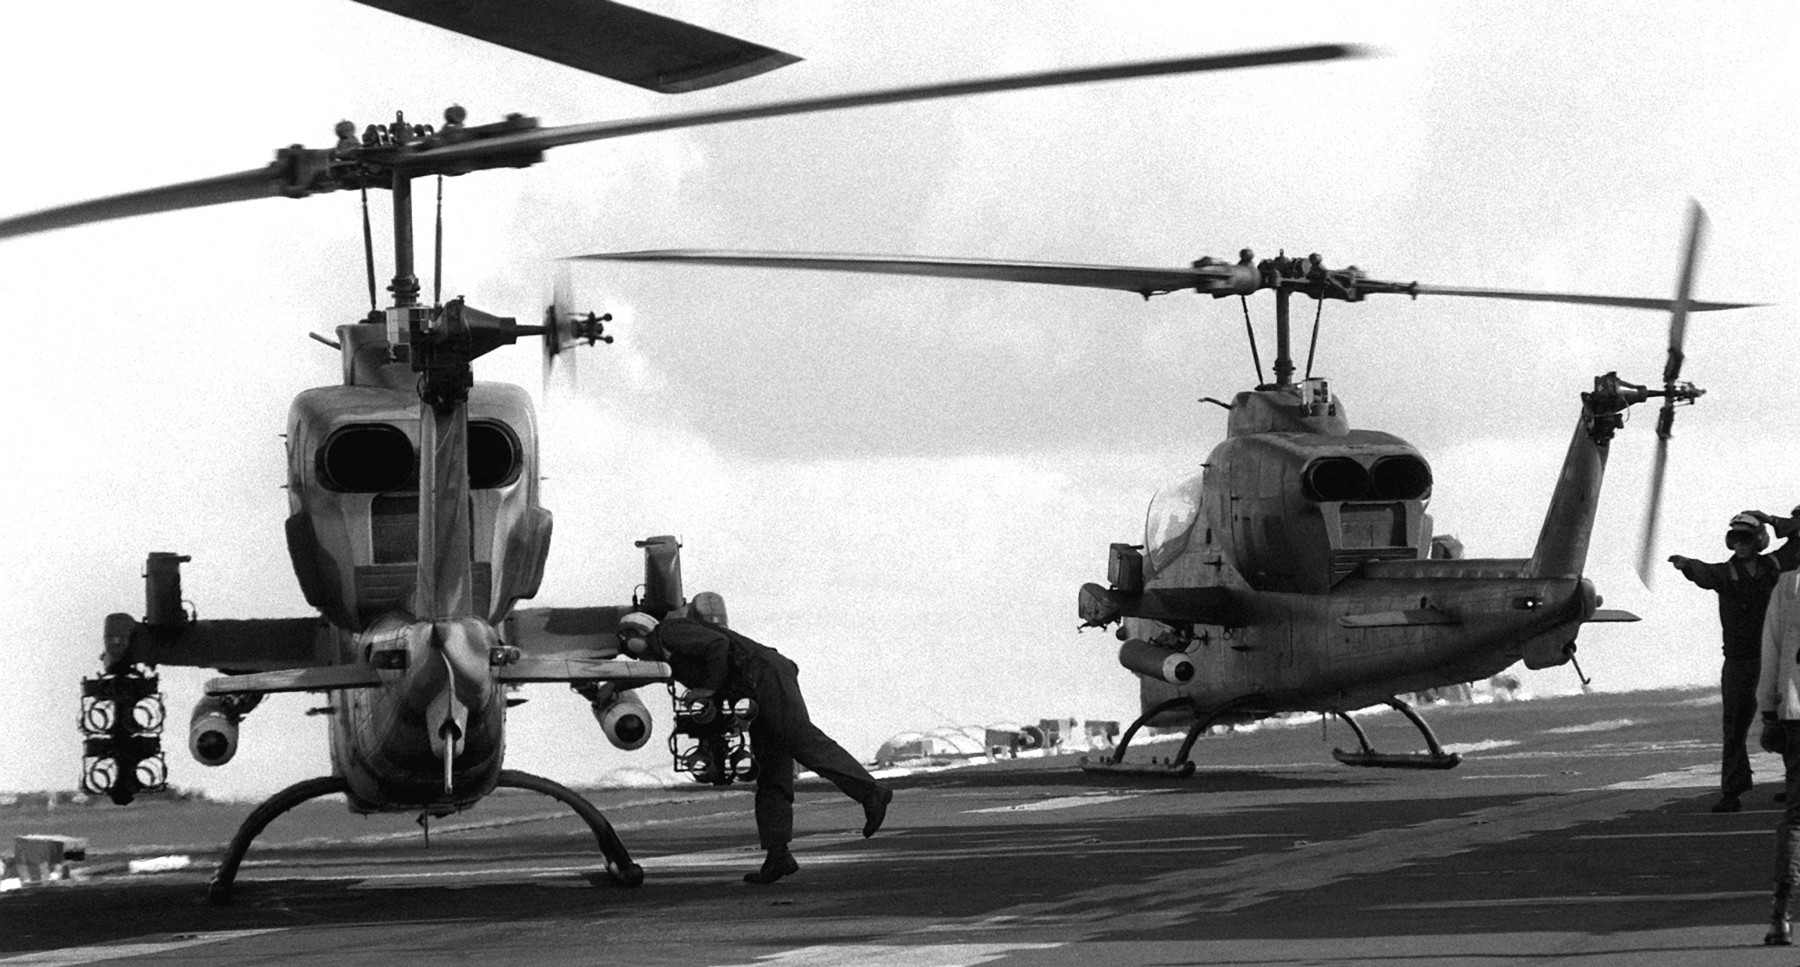 lph-7 uss guadalcanal iwo jima class amphibious assault ship landing platform helicopter us navy 48 persian gulf ah-1 sea cobra